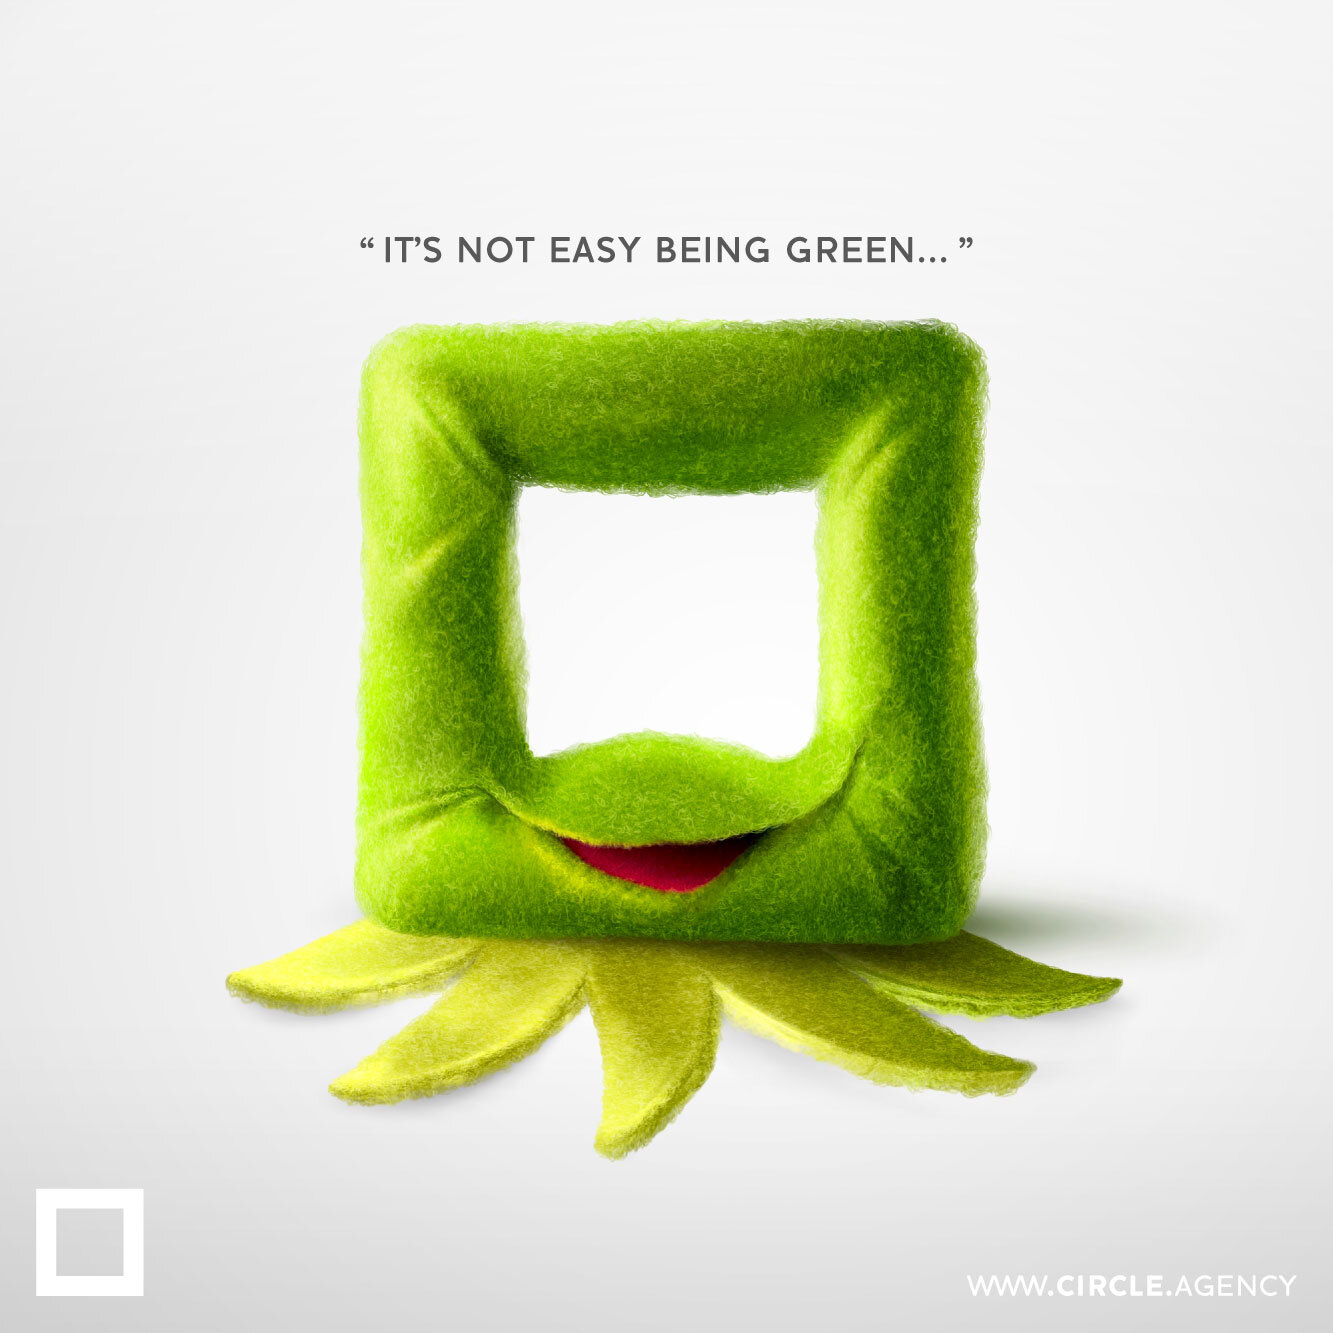 Kermit_the_Frog_icon_green_character_illustration_square_shape_circle_visual_communication_branding_advertising_design_digital_media_agency.jpg